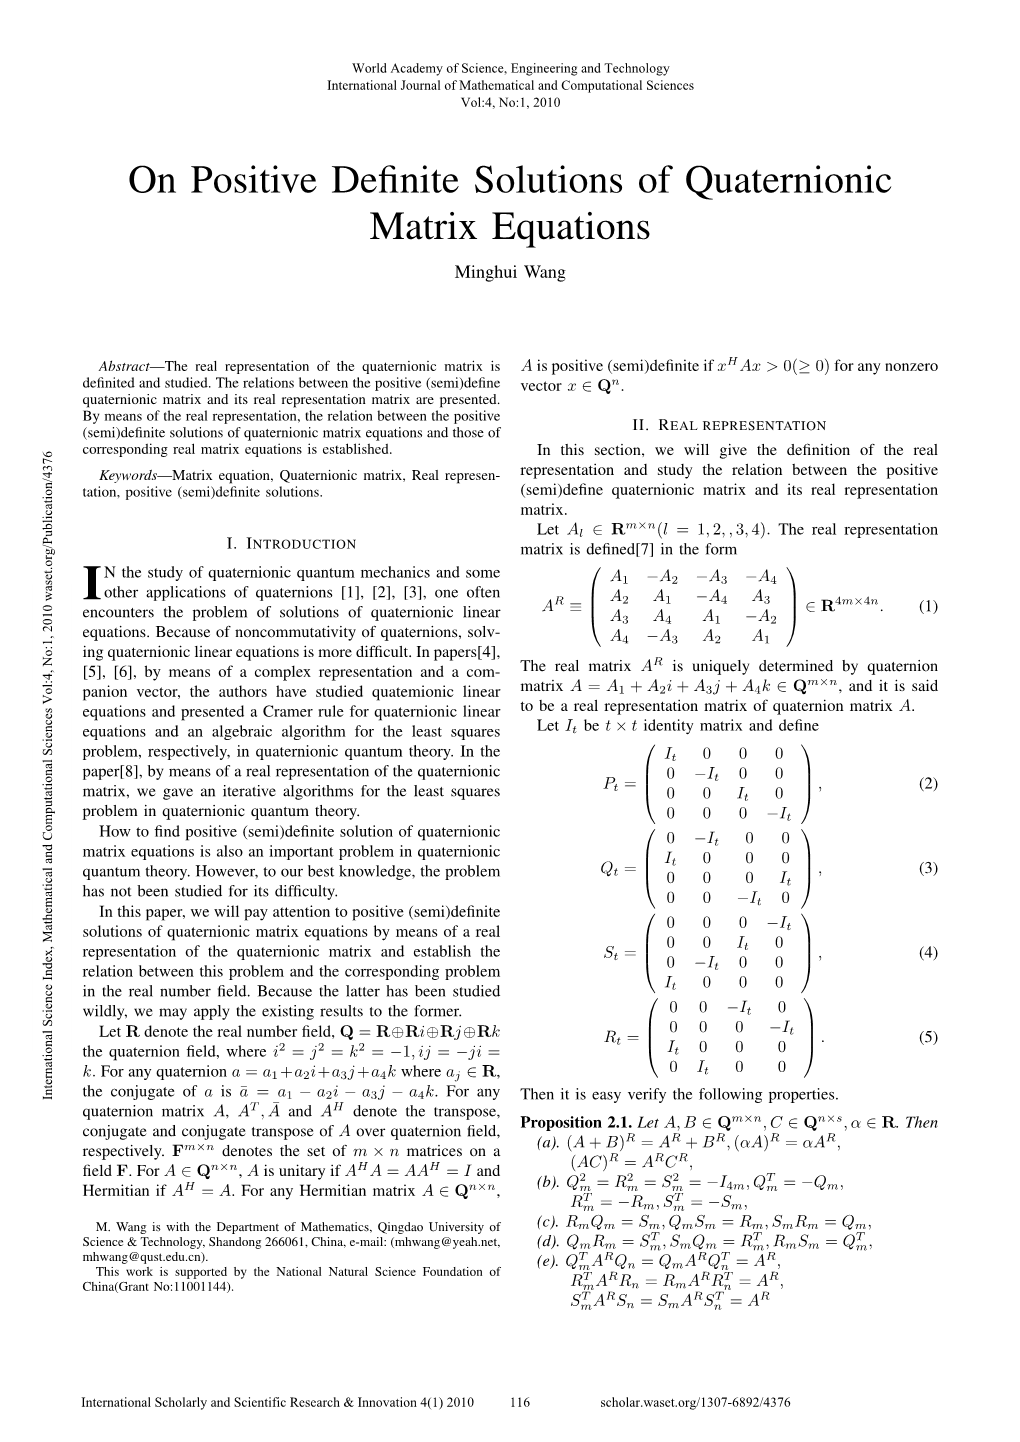 On Positive Definite Solutions of Quaternionic Matrix Equations